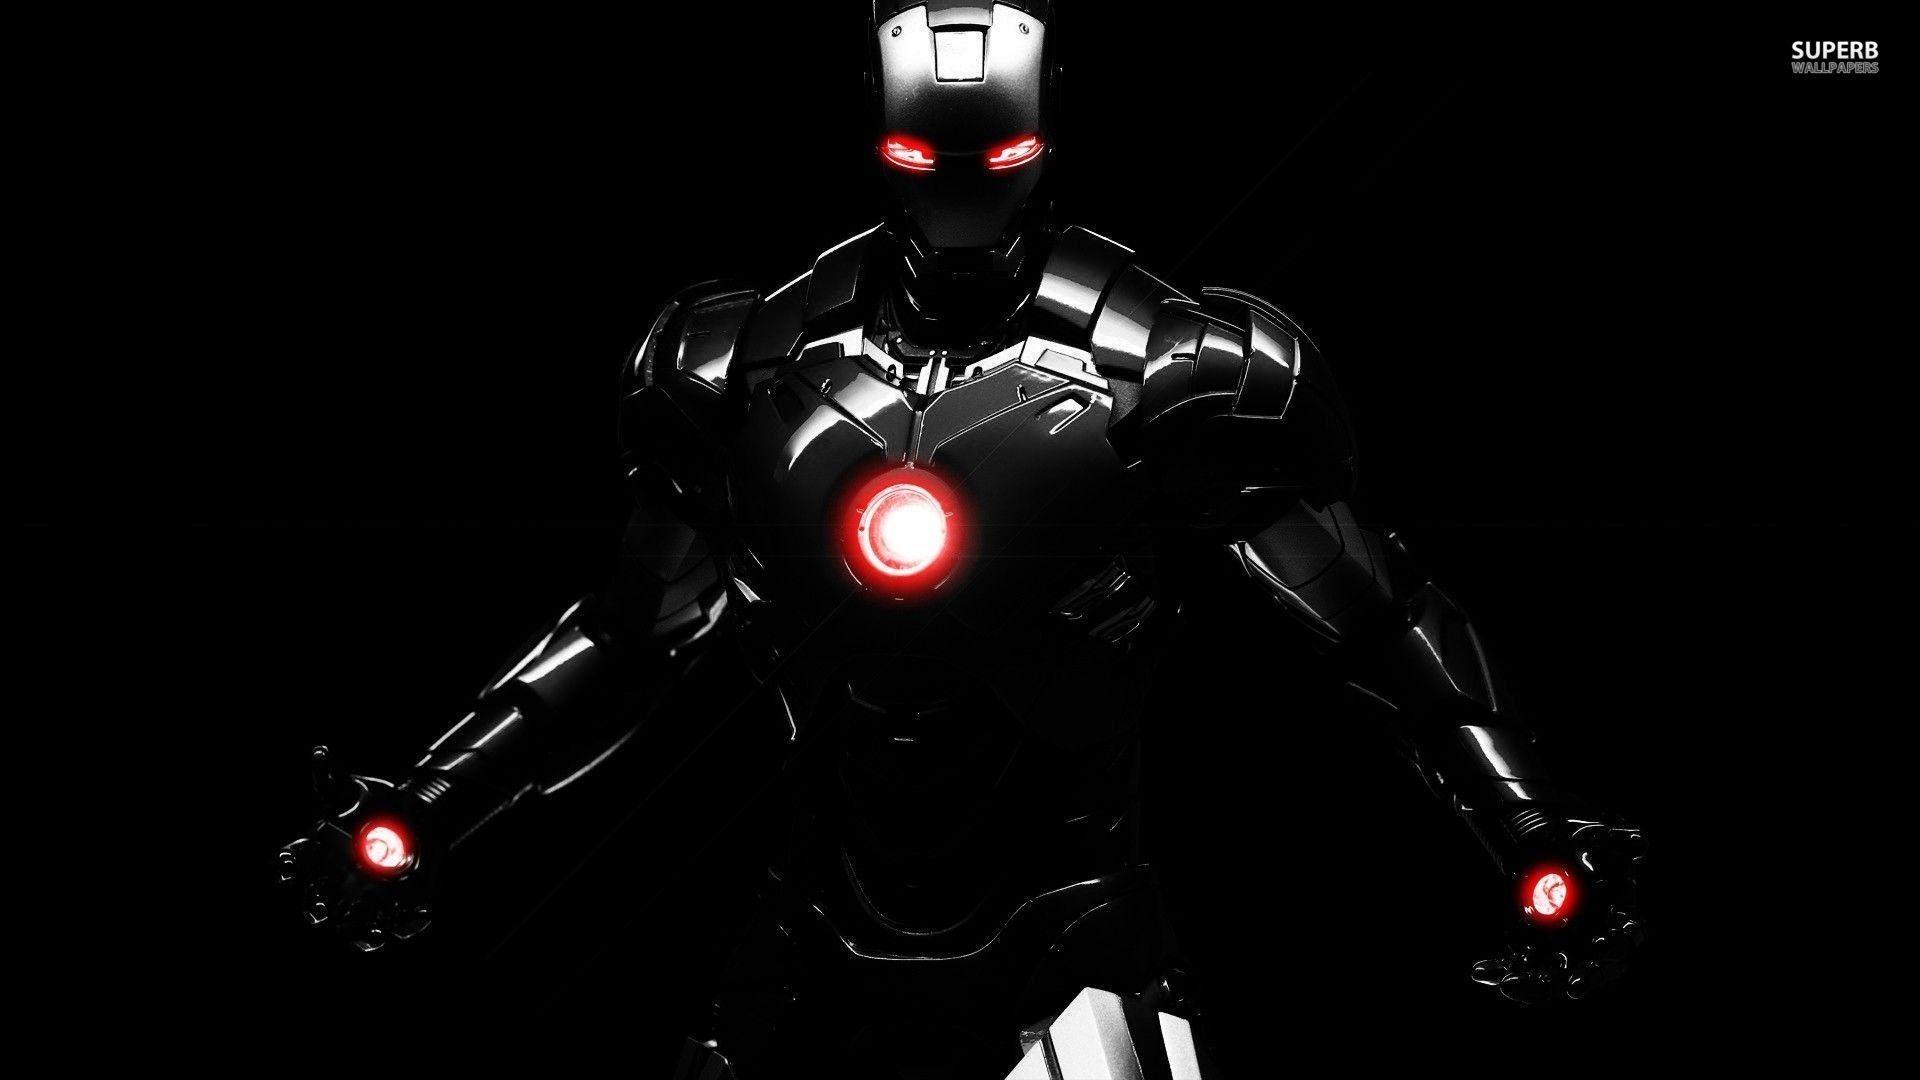 Iron Man Wallpaper 4K, Digital Art, Marvel Superheroes